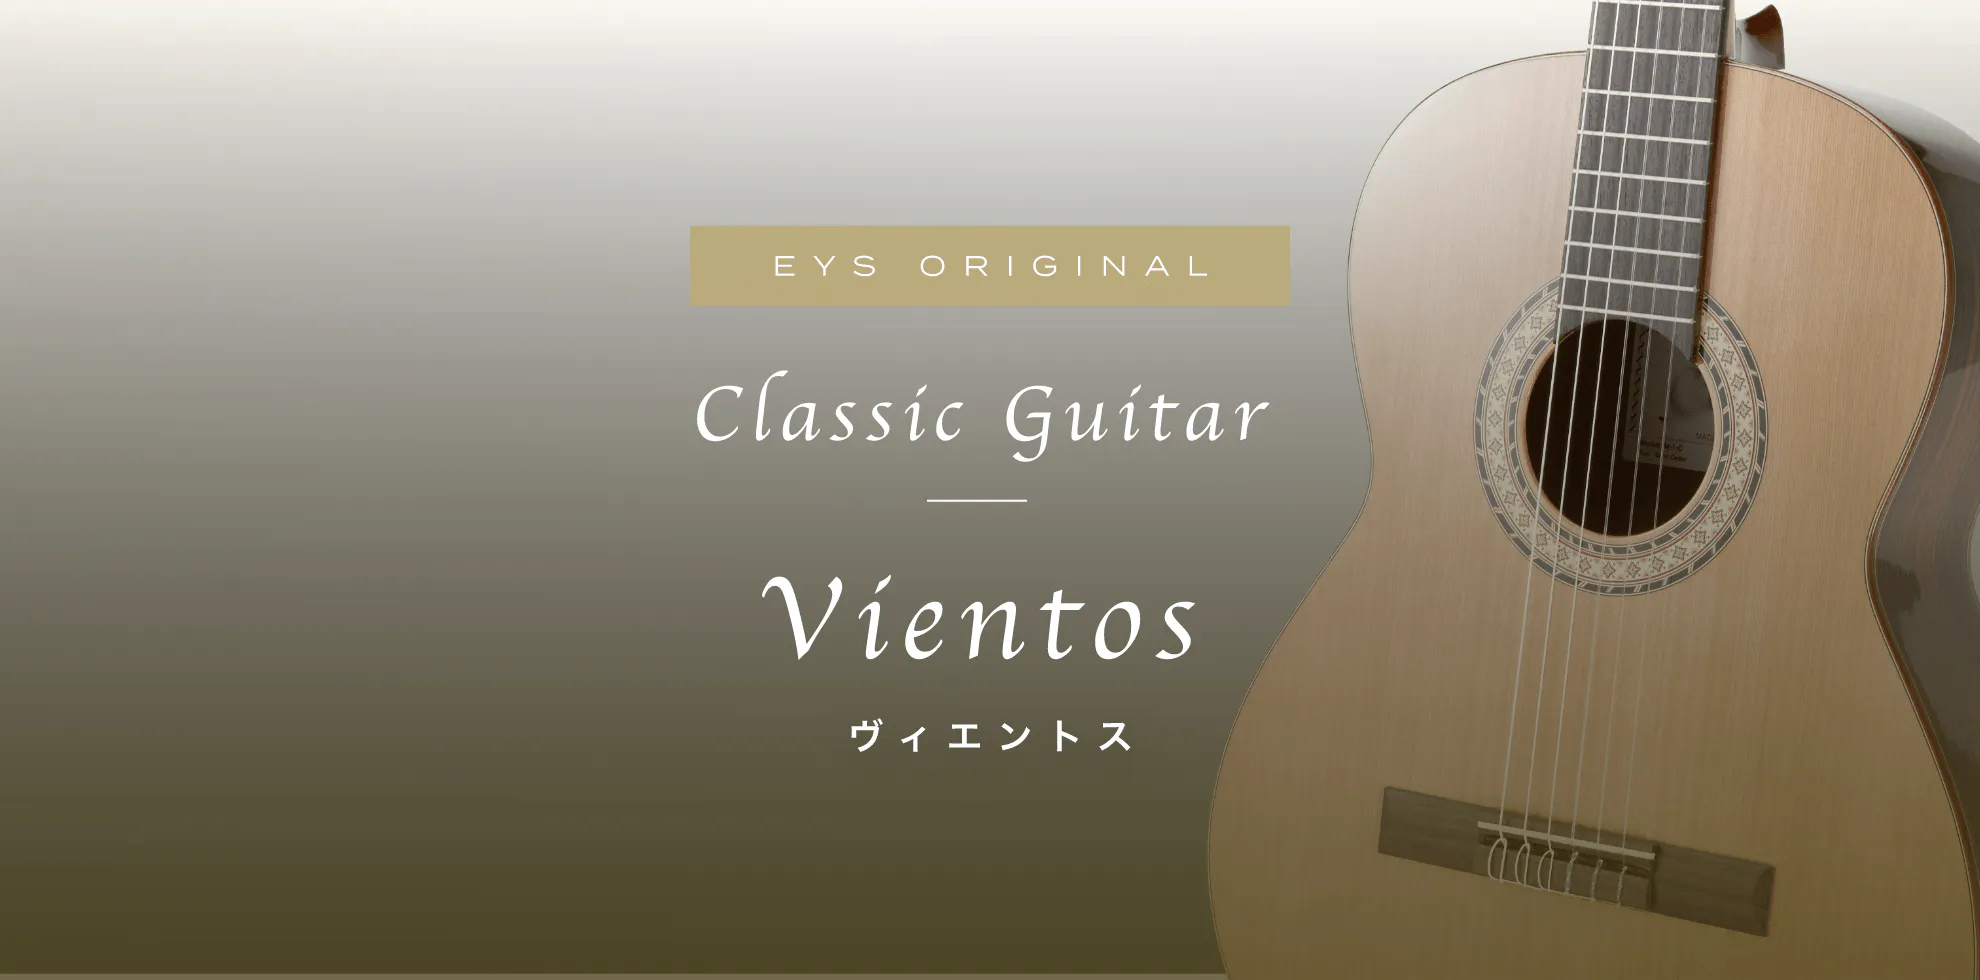 EYS ORIGINAL Classic Guitar Vientos ビエントス